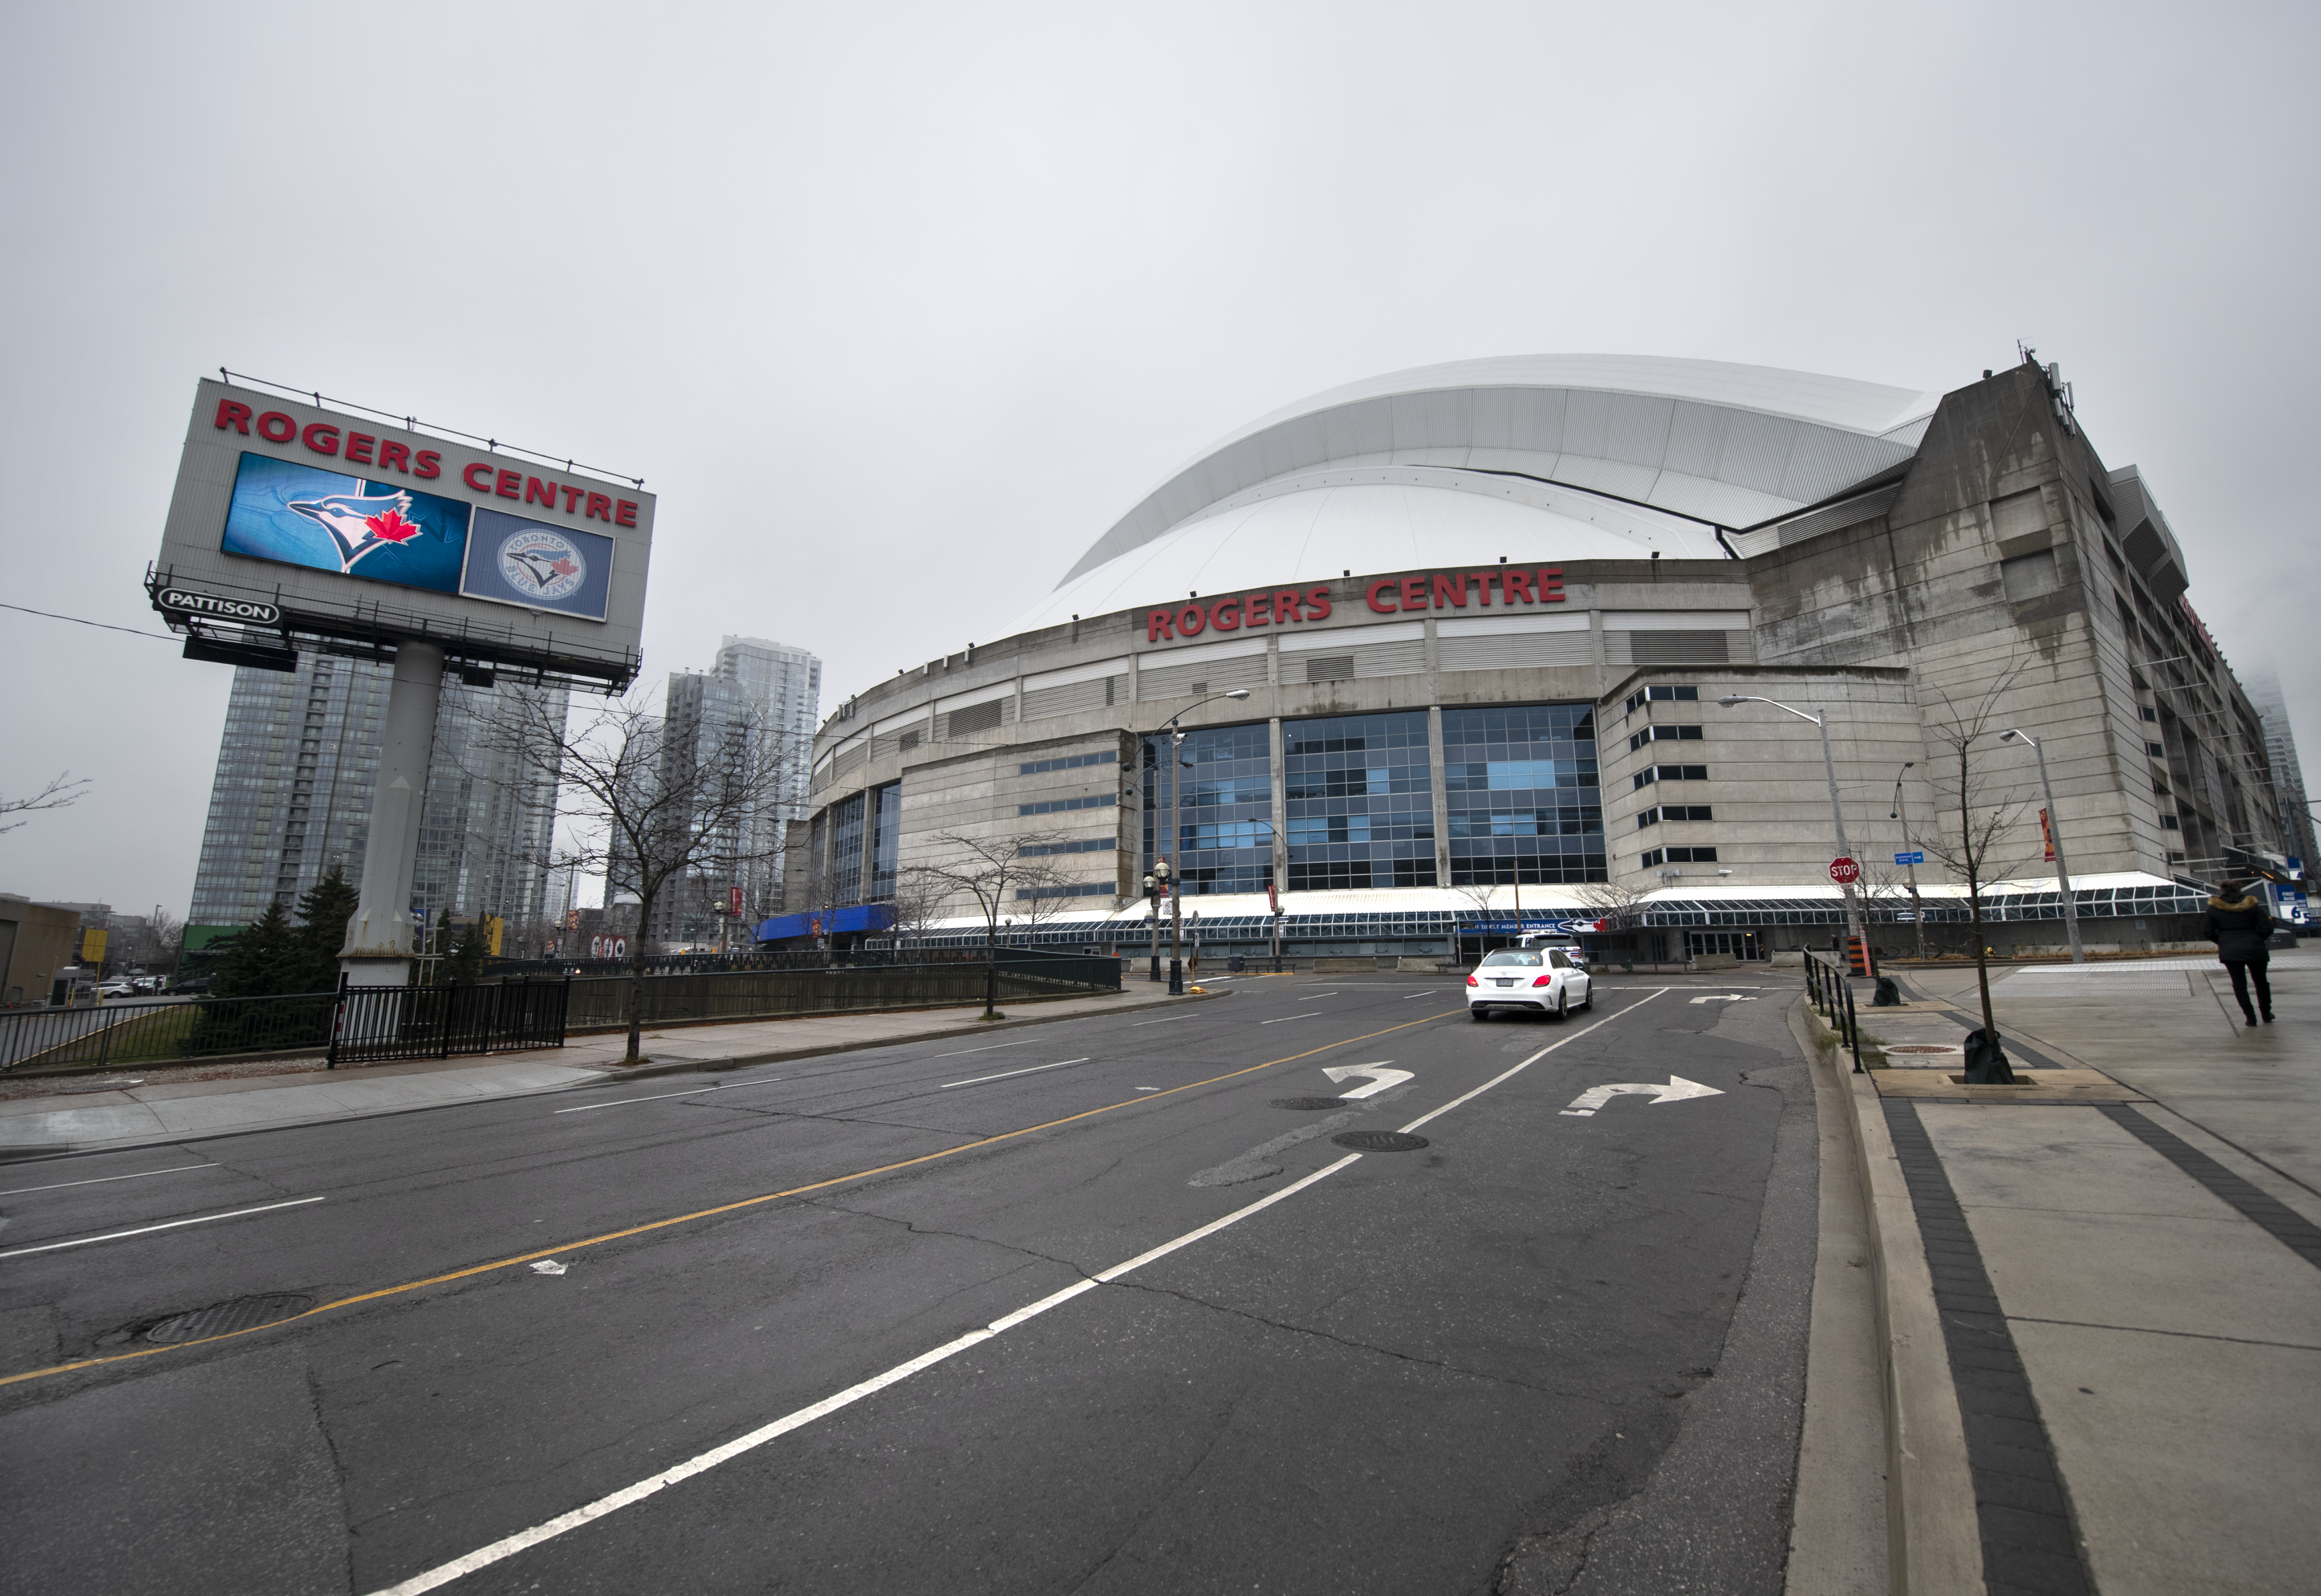 Rogers Centre faces demolition as Blue Jays owner plans new